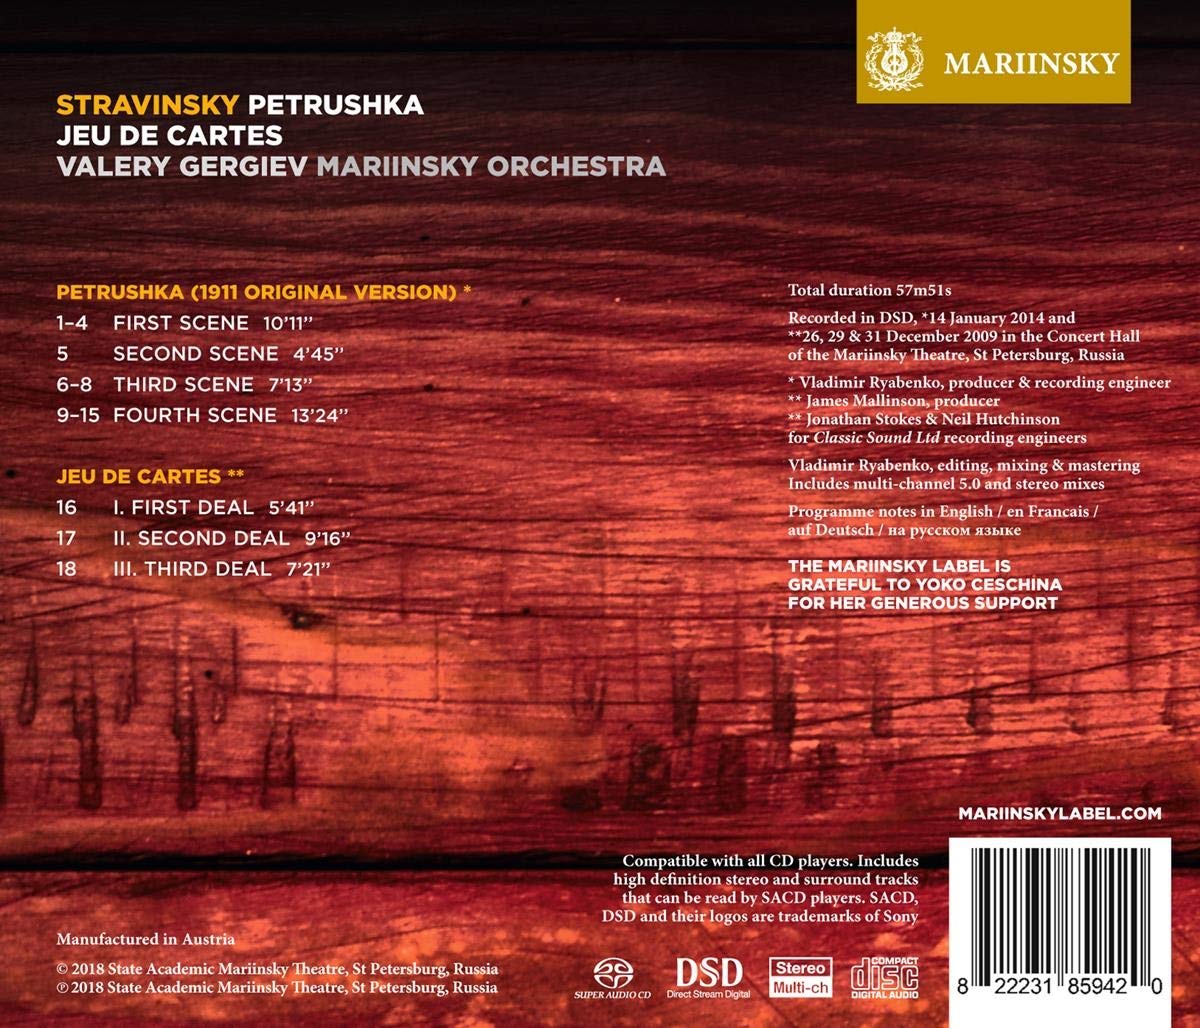 Valery Gergiev 스트라빈스키: 페트루슈카, 카드 게임 (Stravinsky: Petrushka, Jeu de cartes)